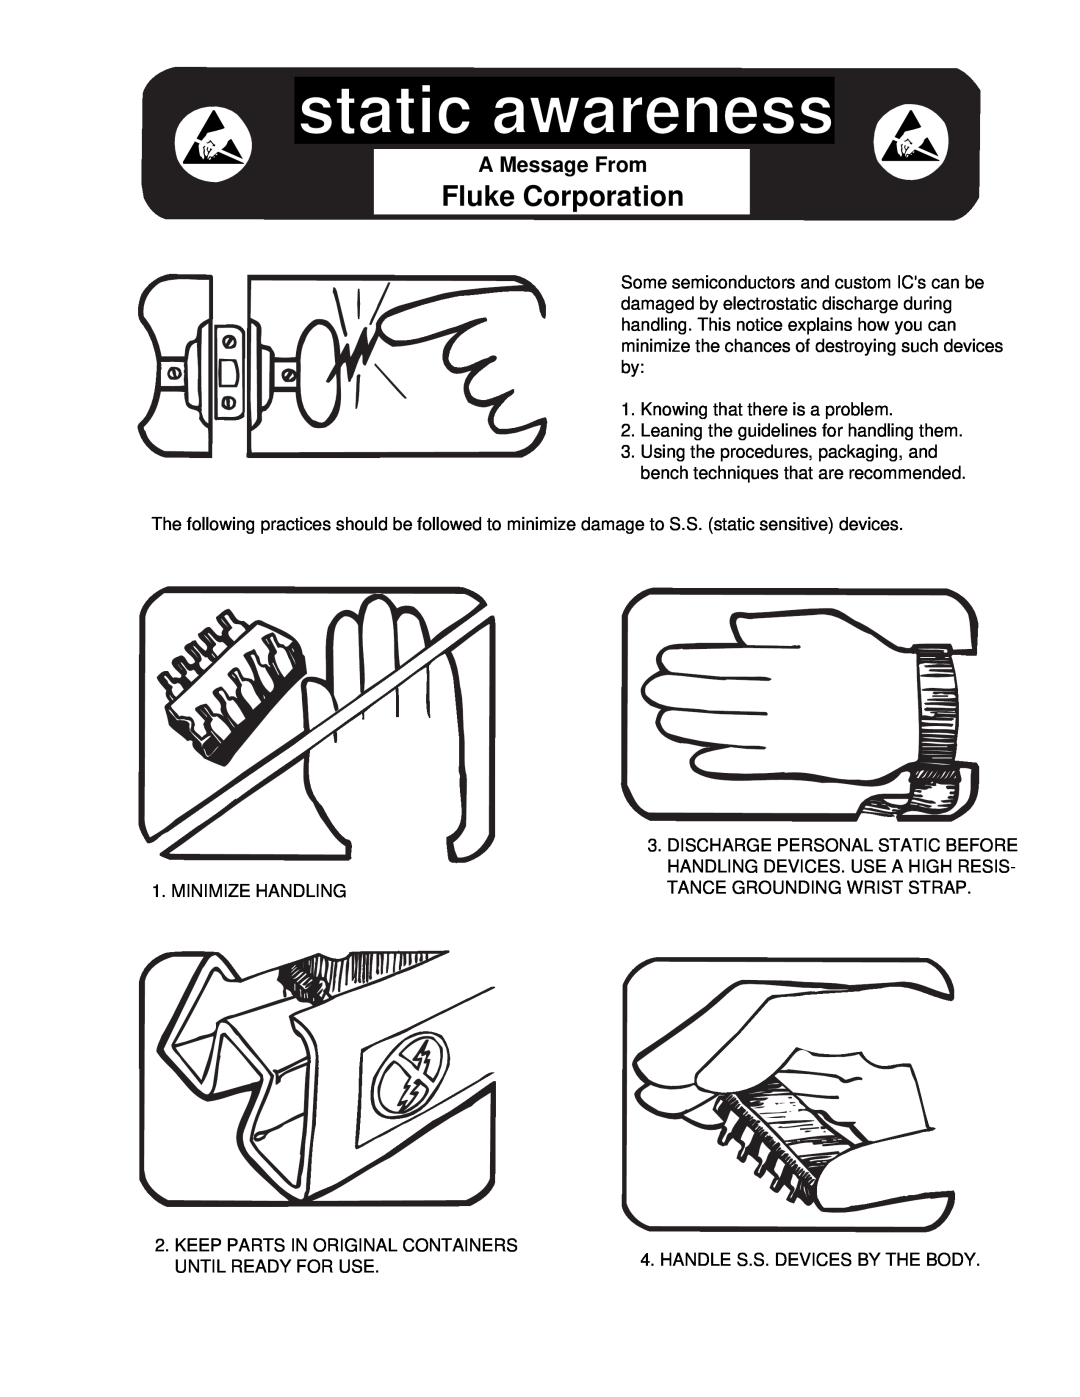 Fluke 5720A service manual A Message From, static awareness, Fluke Corporation 